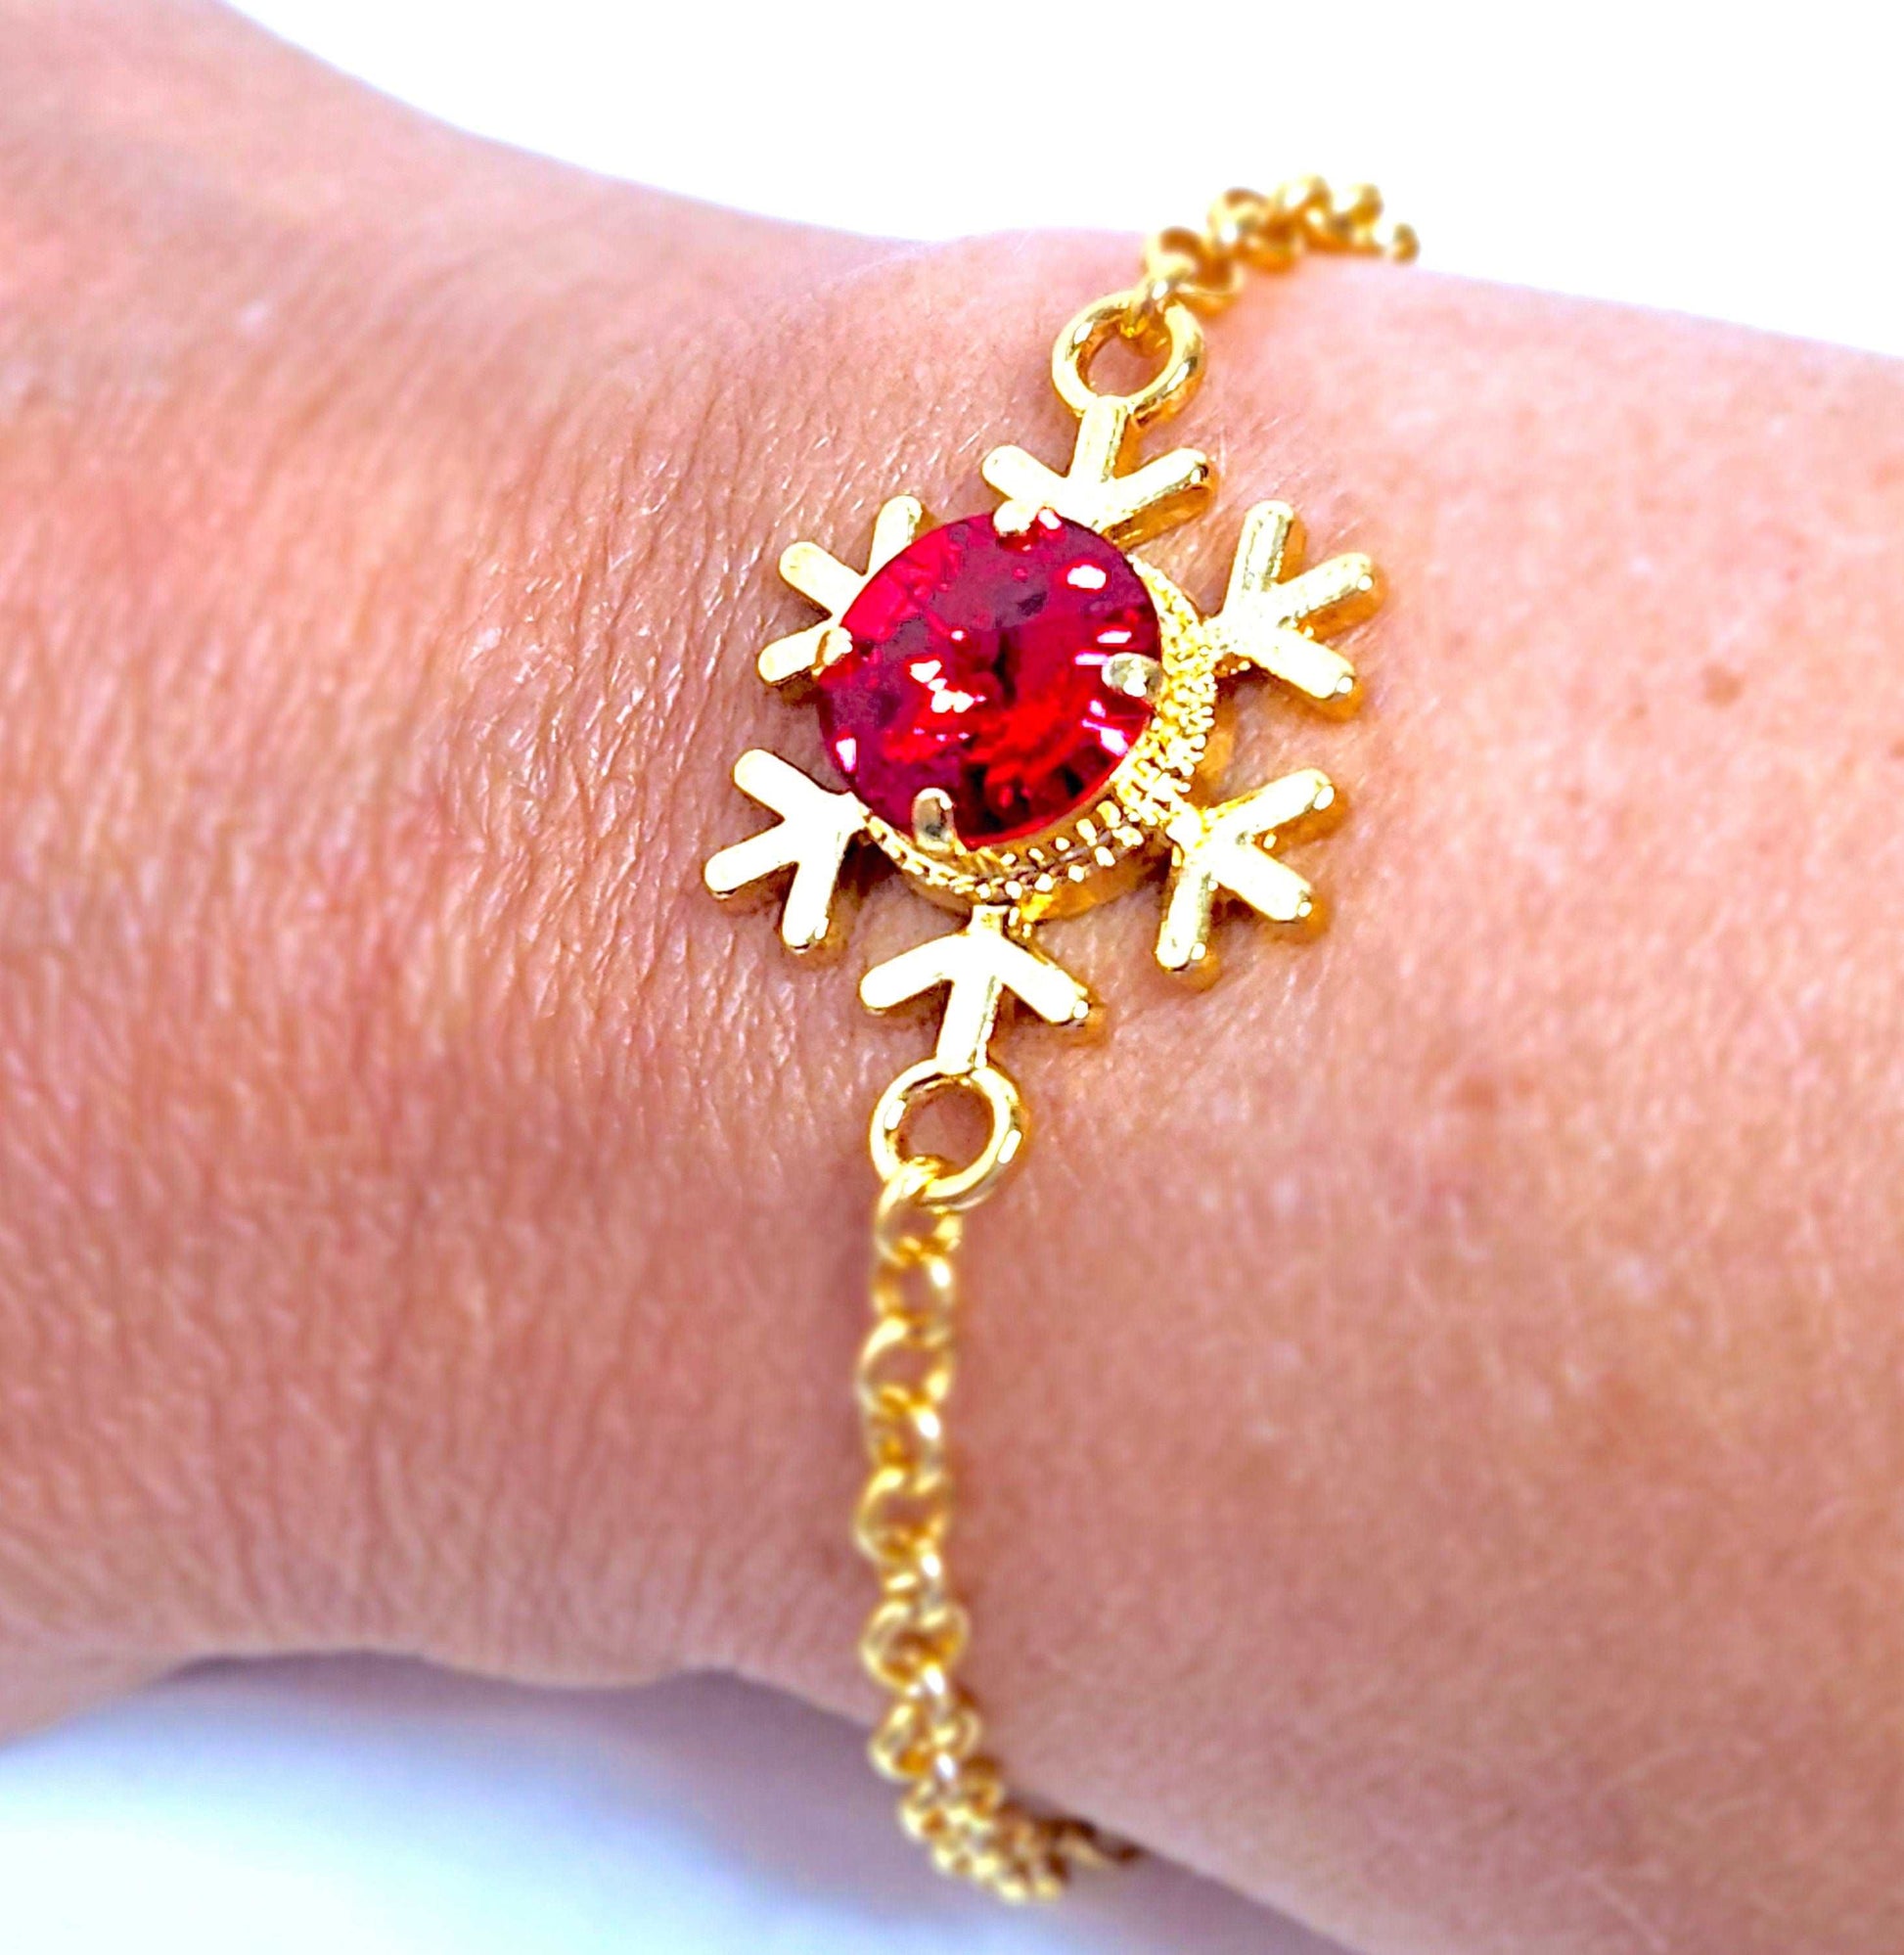 Snowflake Red Crystal Bracelet, Gold Plated, Austrian Crystal Chain Bracelet, Adjustable Length, Christmas Gift for Her, Bracelets for Women